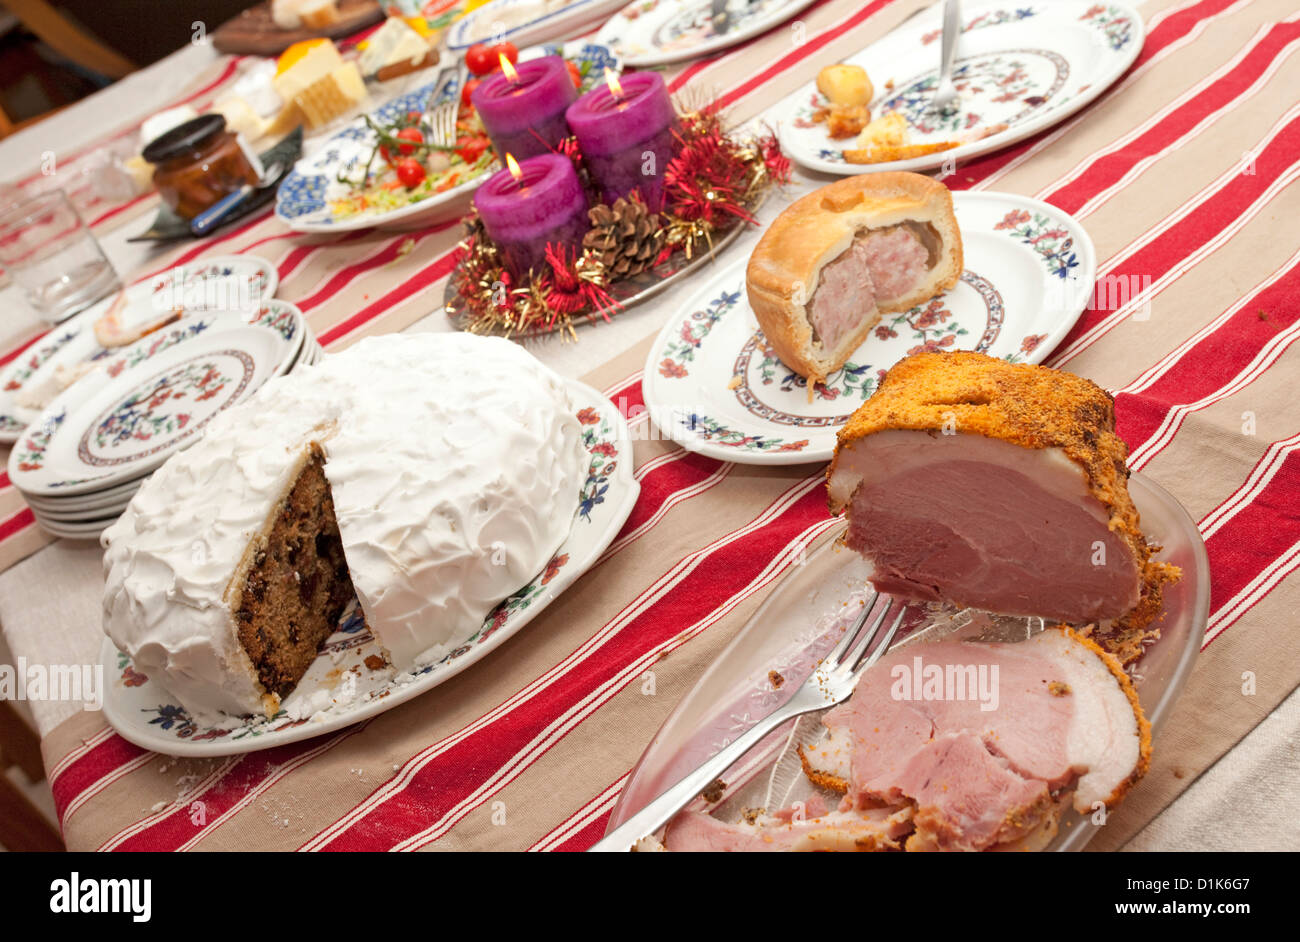 christmas foods on table Stock Photo